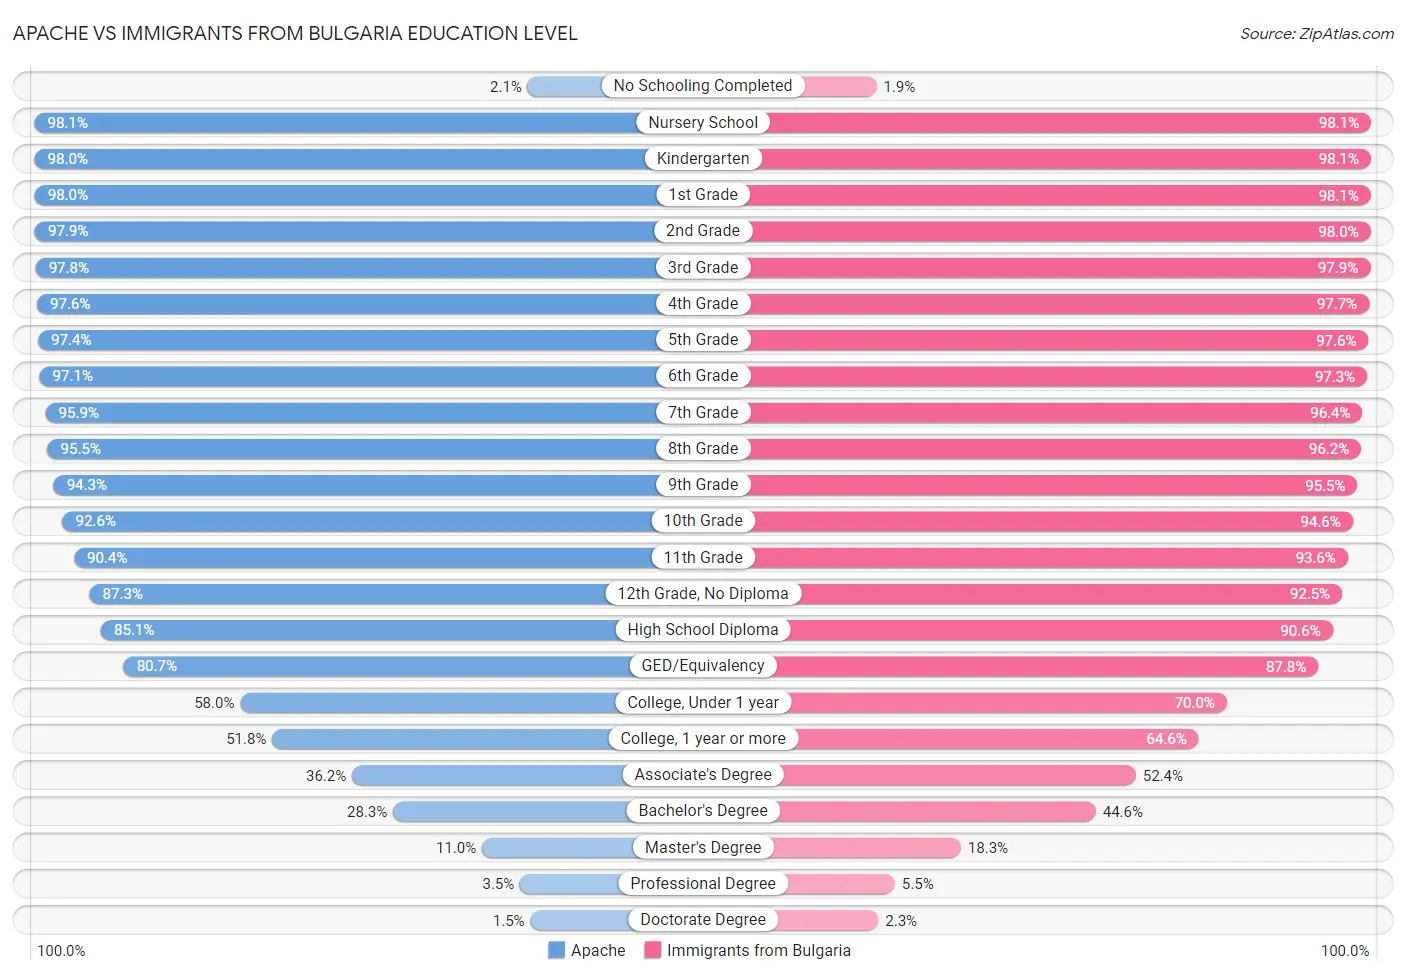 Apache vs Immigrants from Bulgaria Education Level